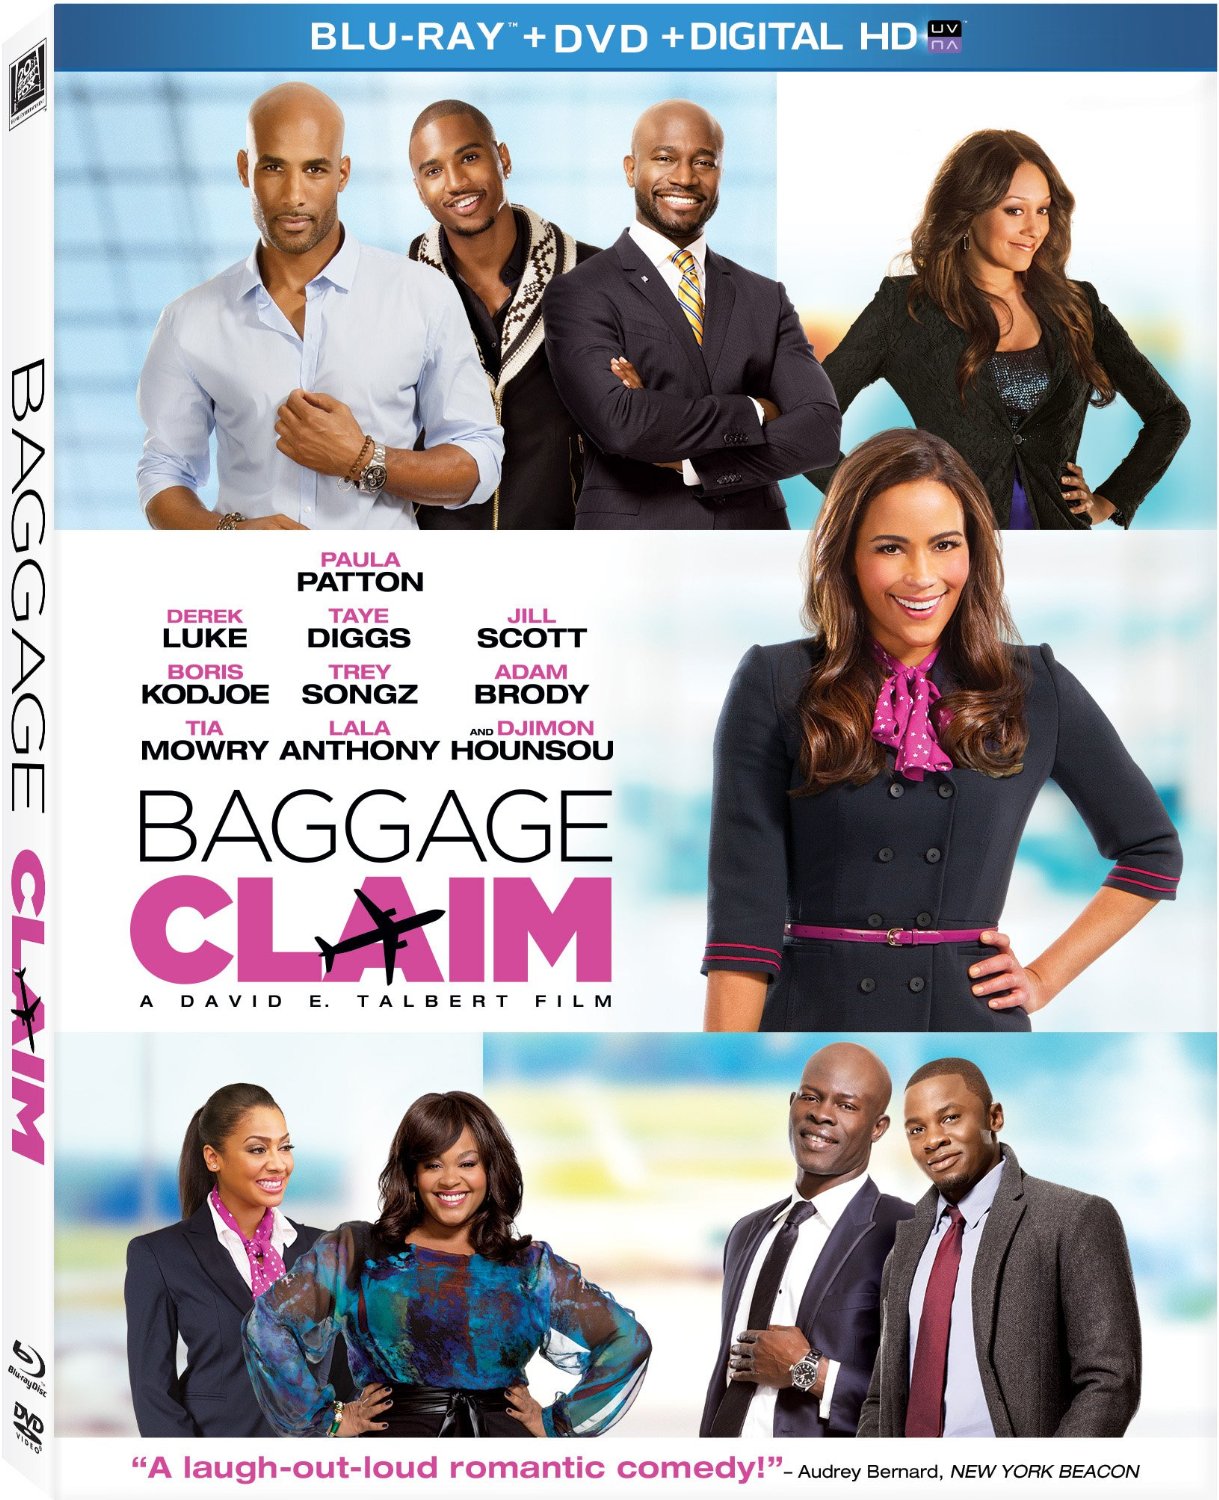 Baggage Claim Blu-ray Review